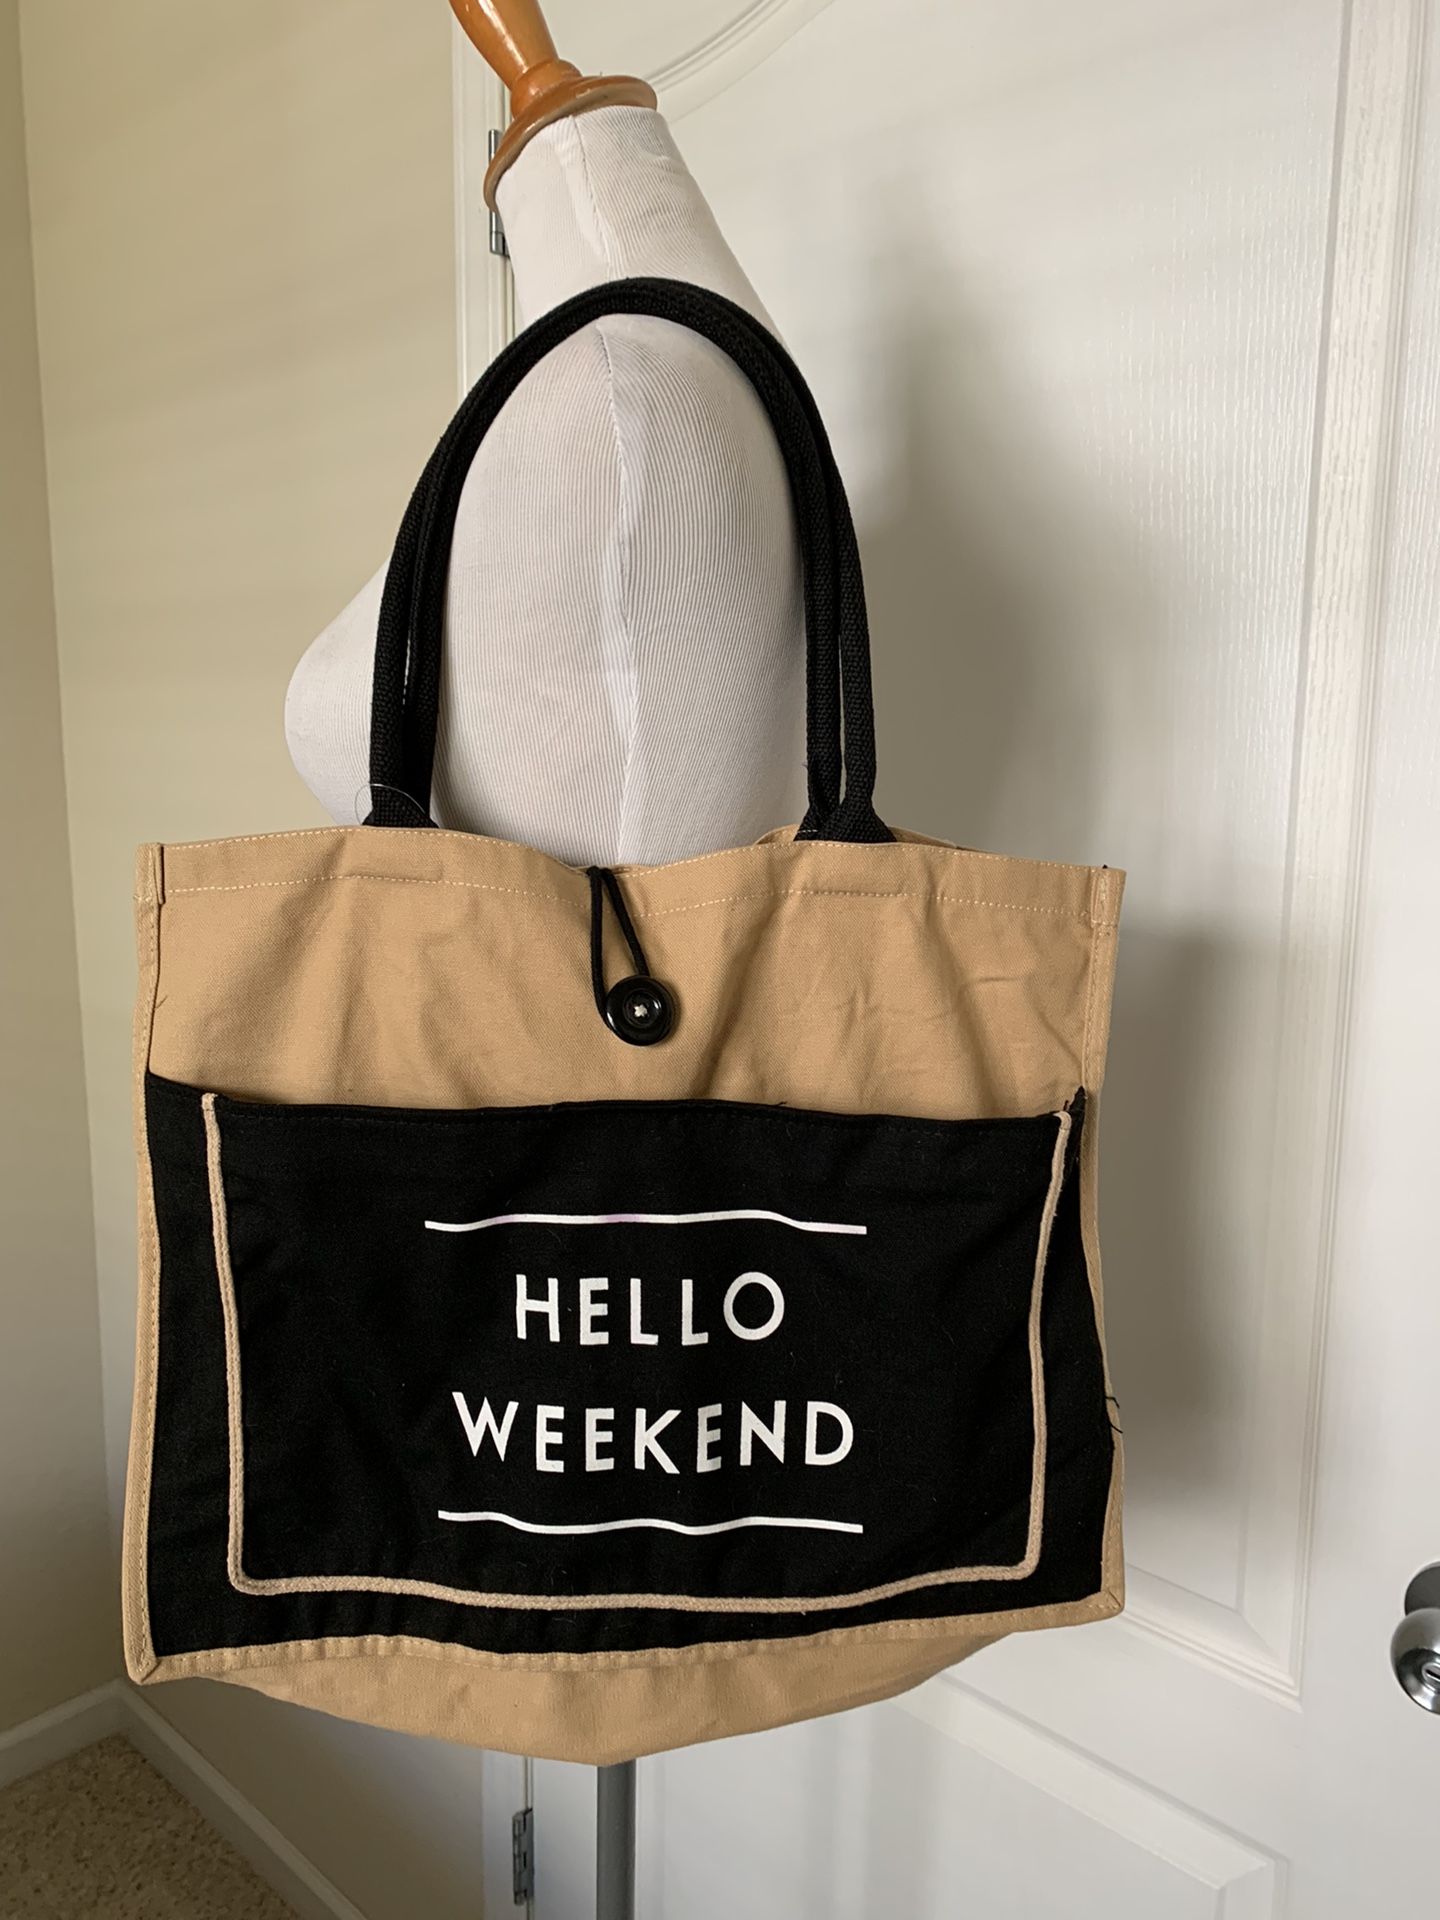 NWT Hello Weekend Tote Handbag 